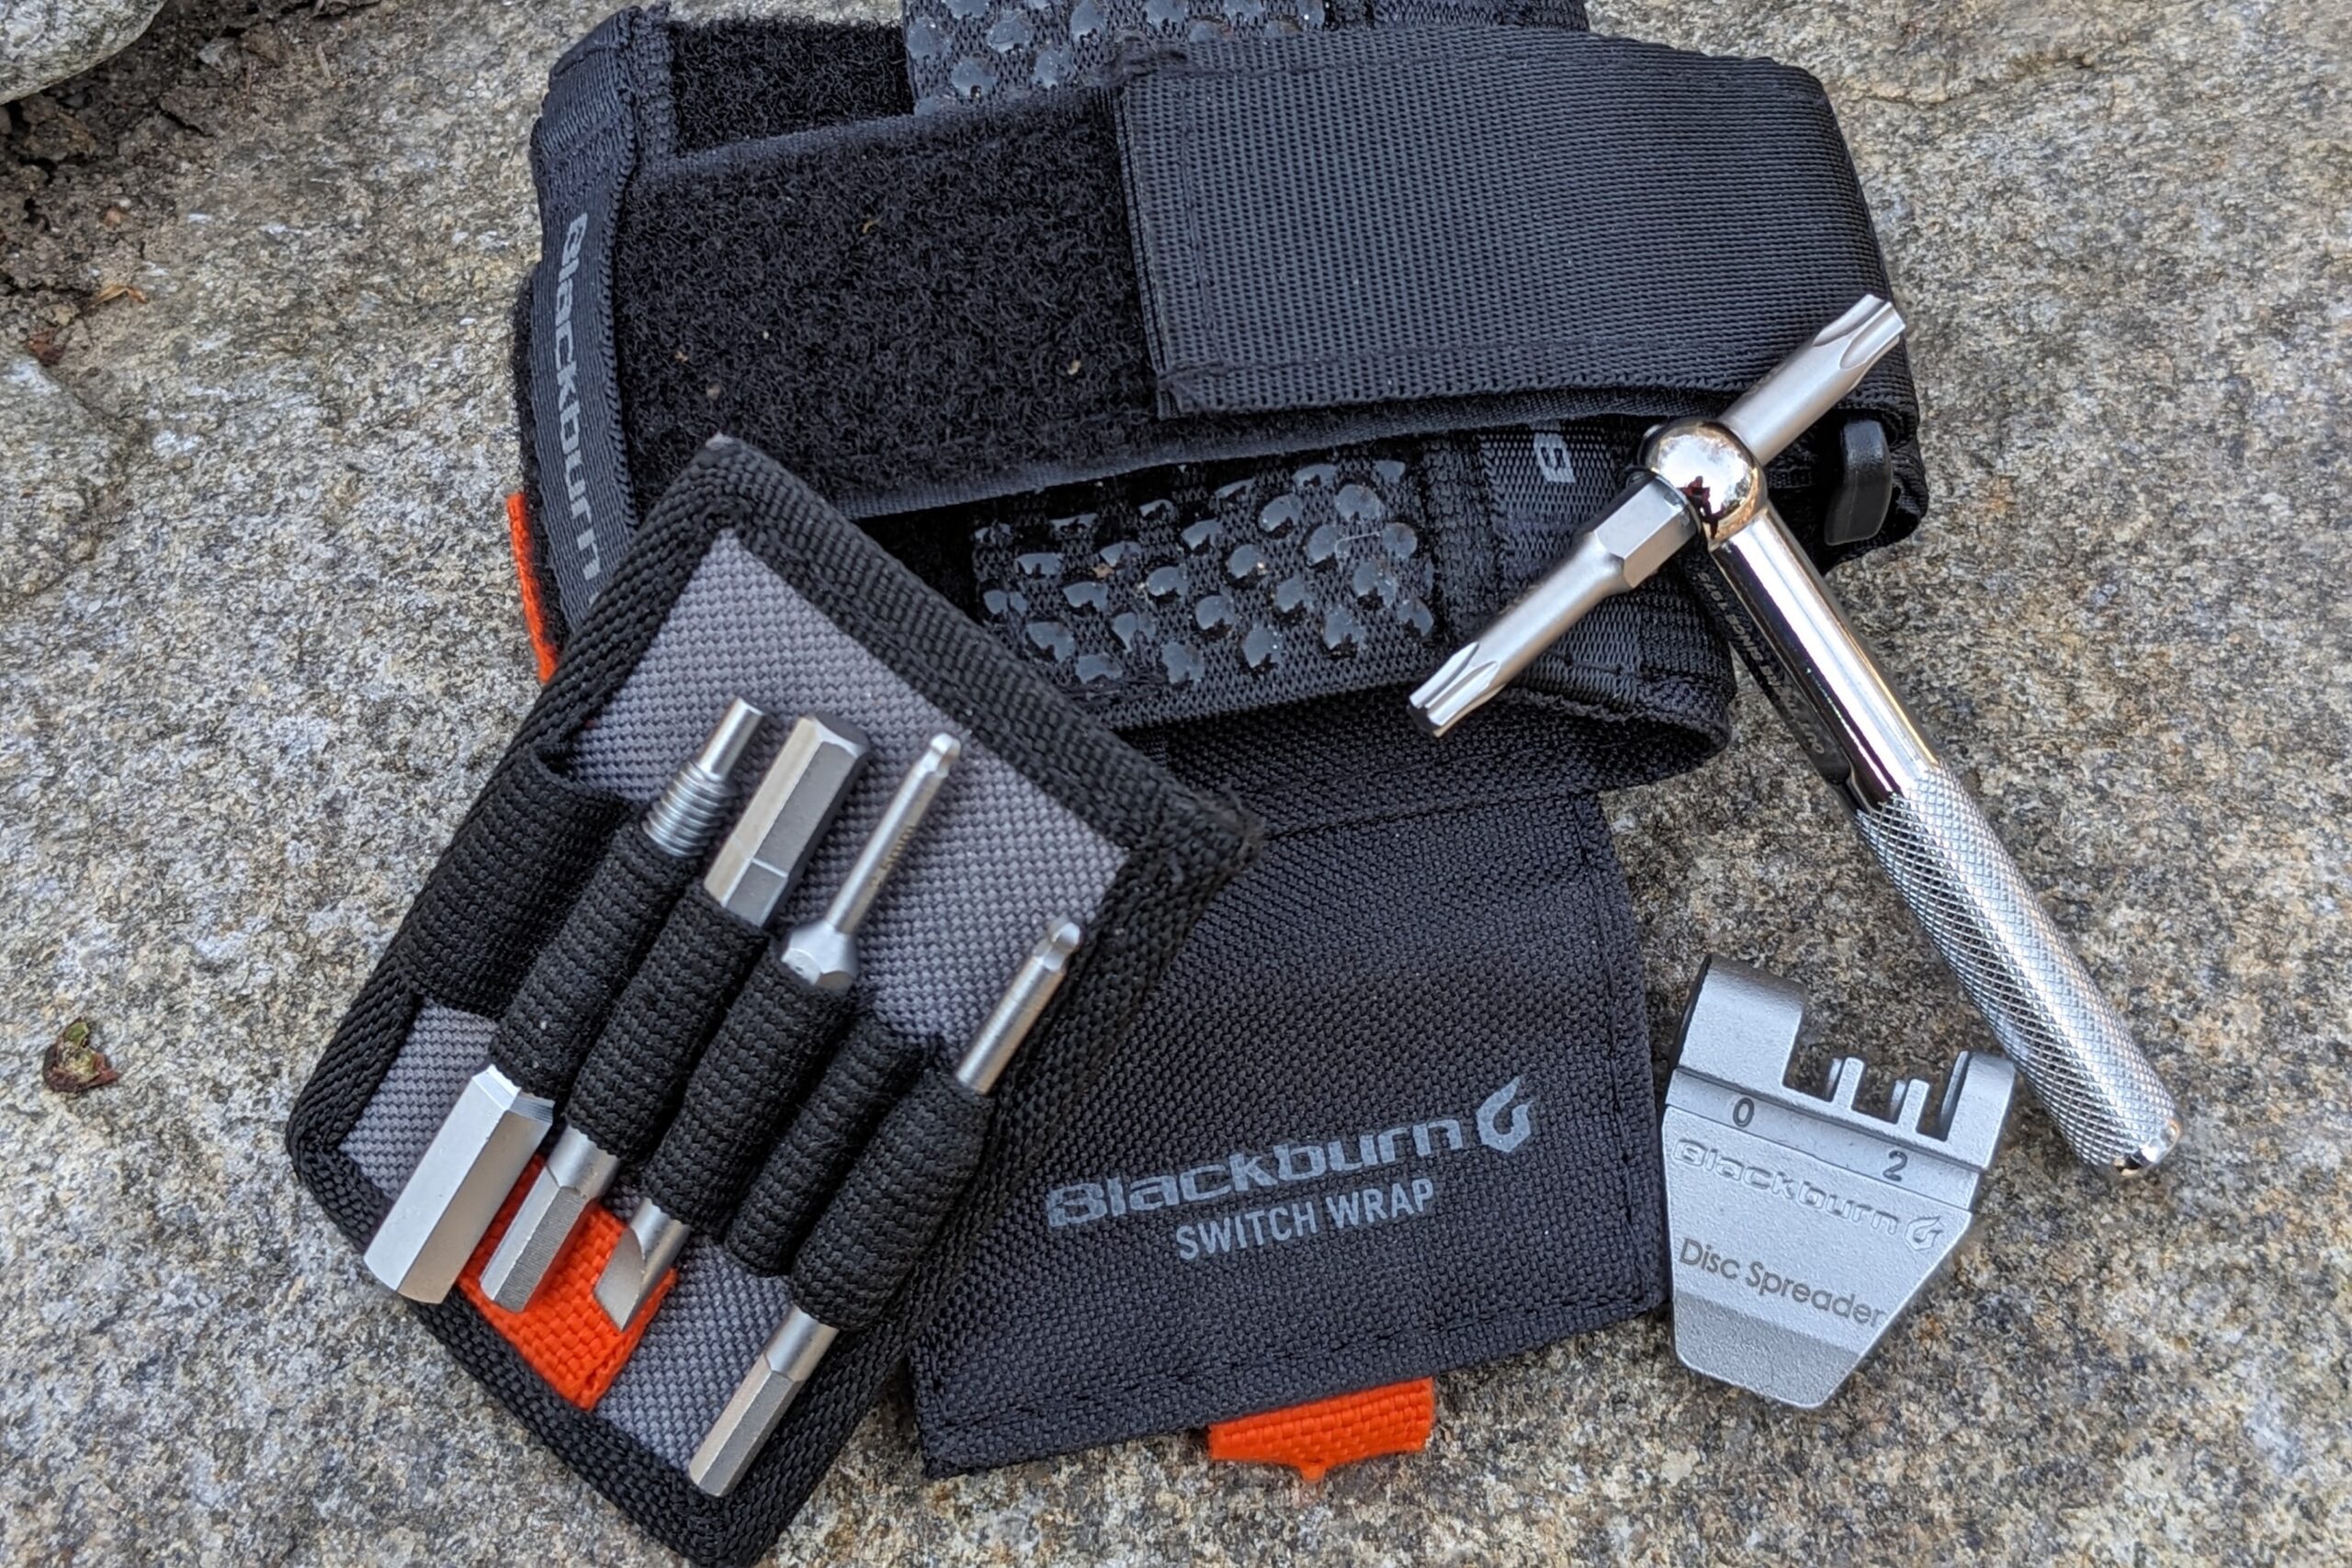 The tools inside the Blackburn Switch Wrap Tool Kit